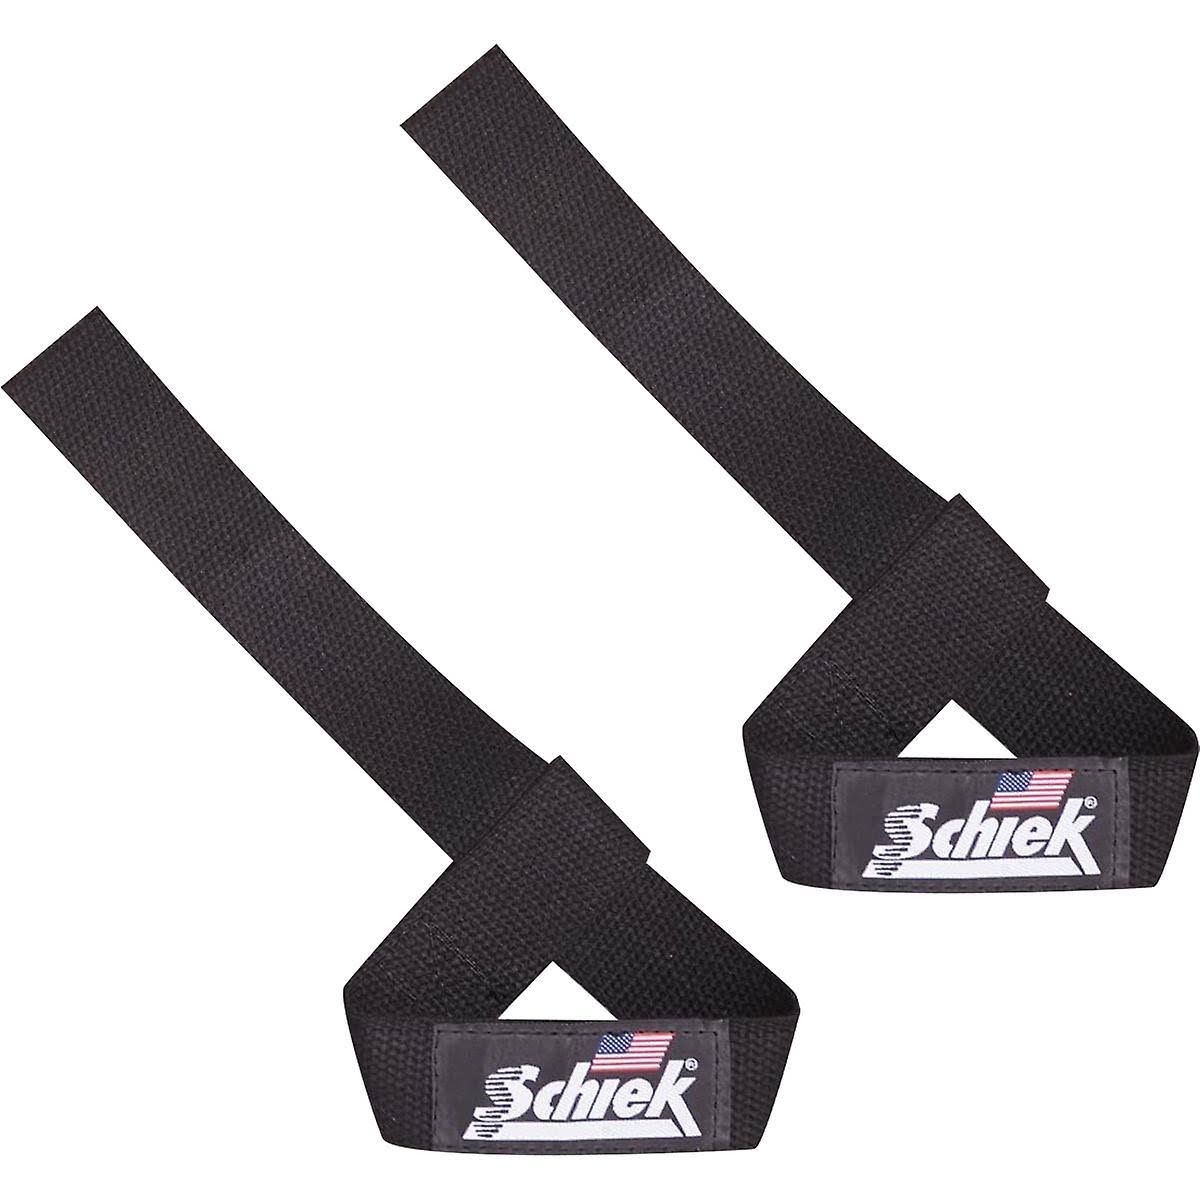 Schiek Sports Basic Lifting Straps - Black, 2"